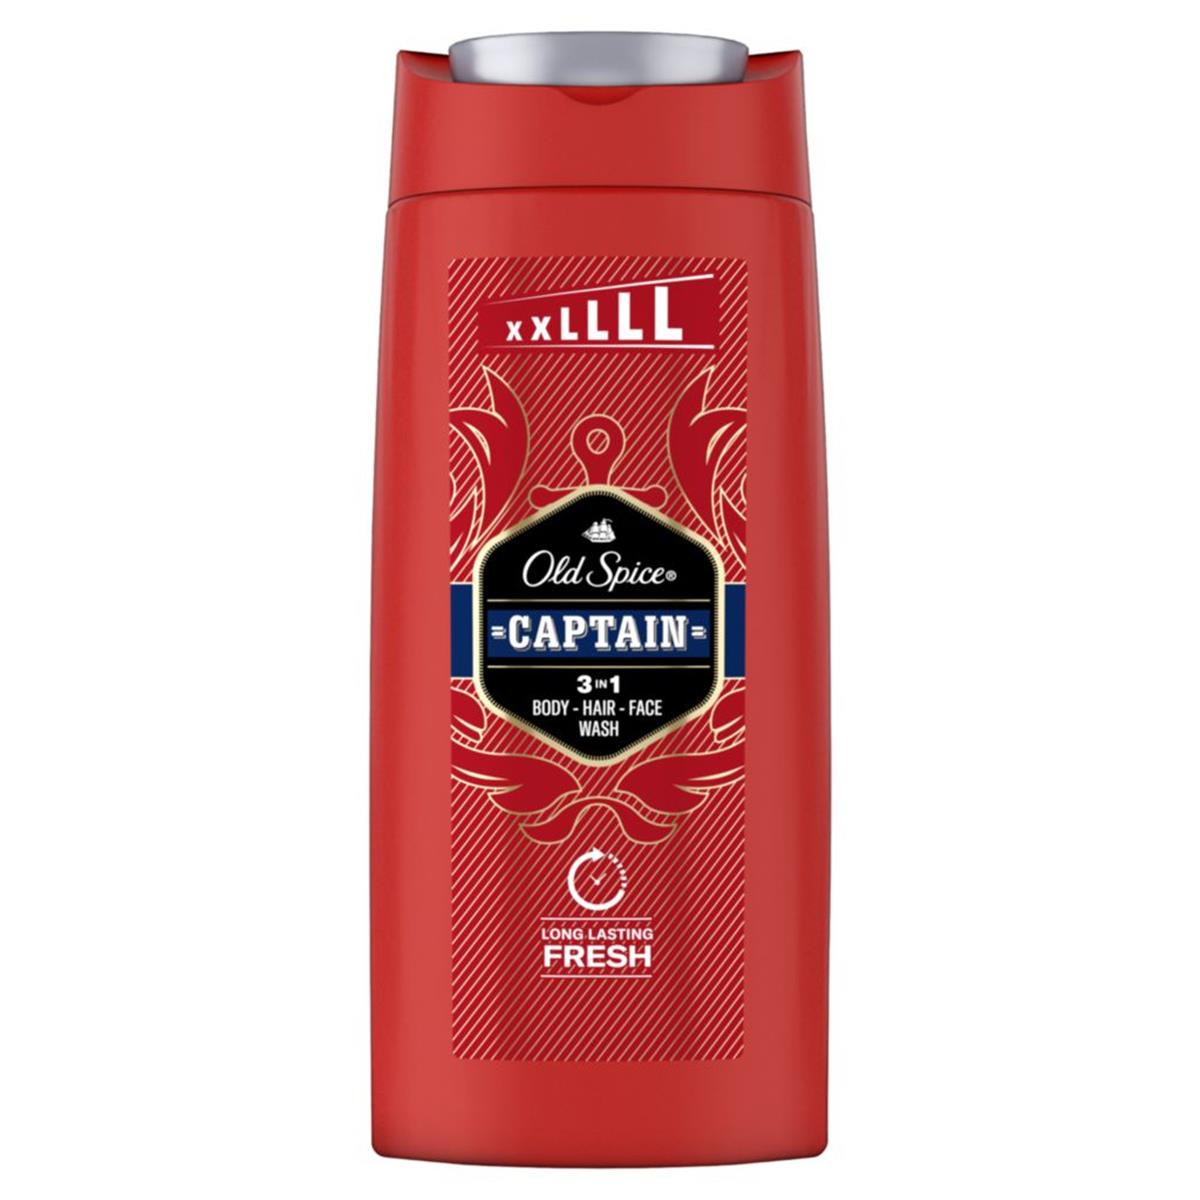 Old Spice Sprchový gél 3 v 1 Captain ( Body, Hair, Face Wash) 675 ml